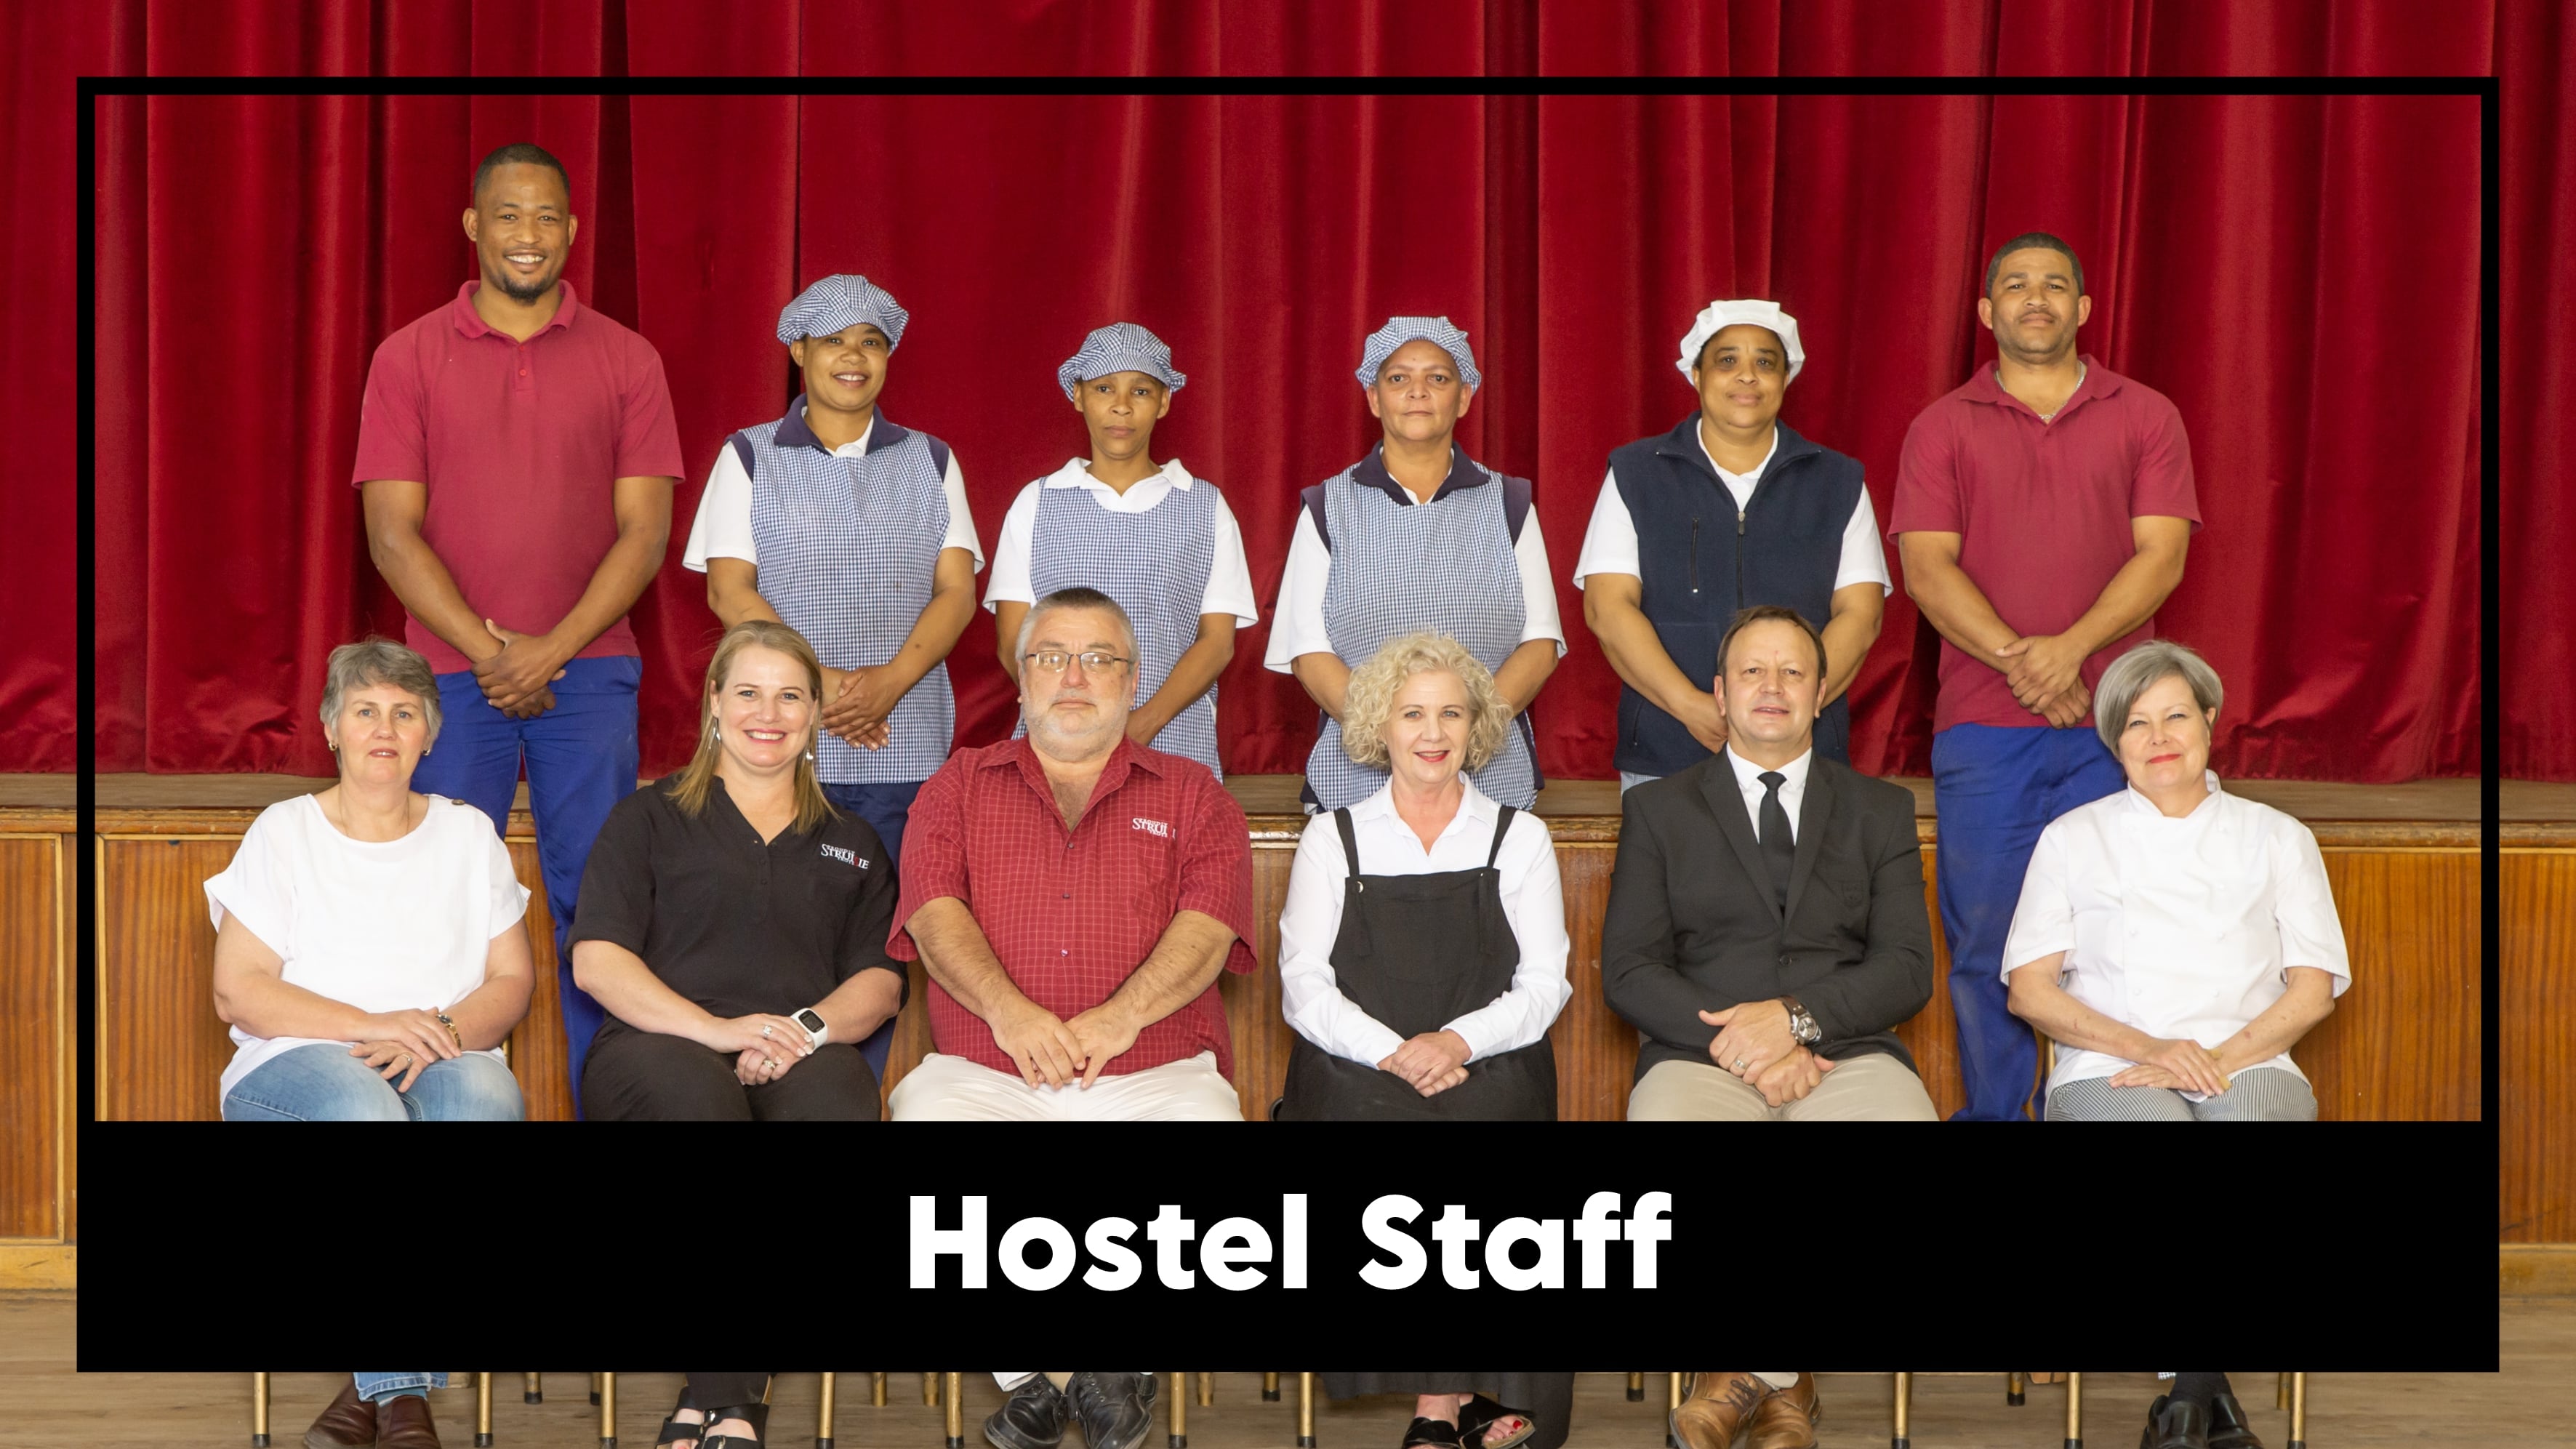 Hostel staff